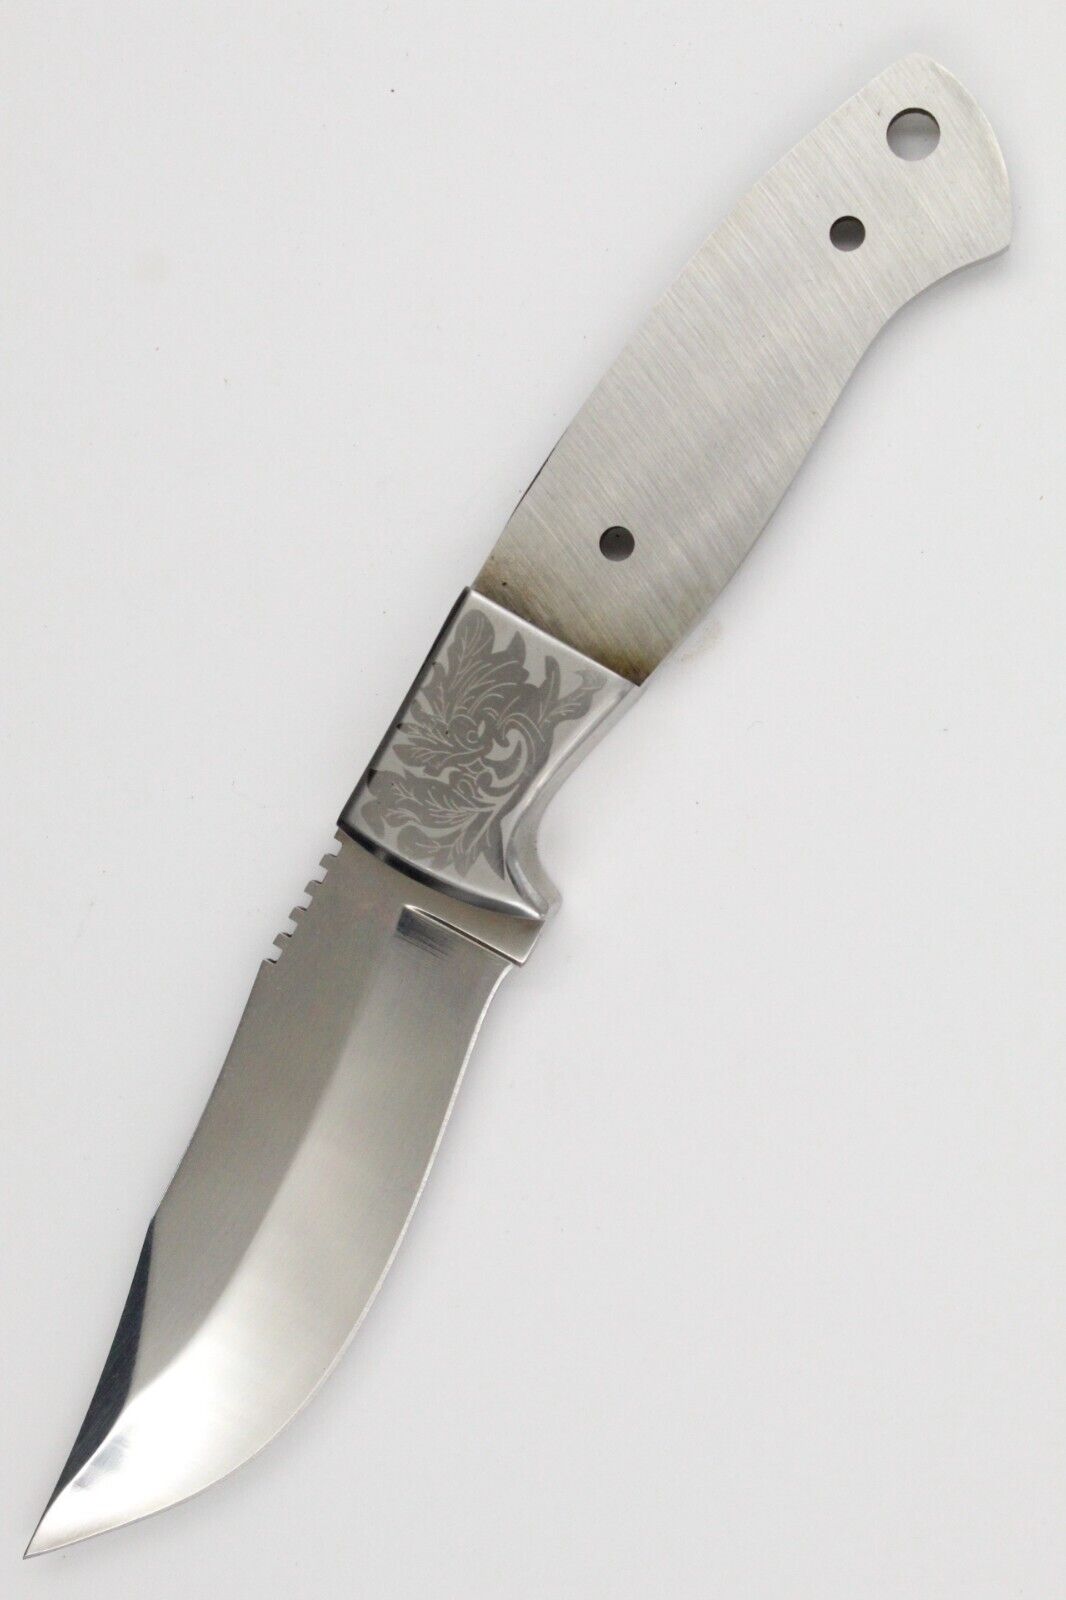 WILD BILL SKINNER KNIFE MAKING / BUILDING BLANK - STAINLESS HUNTING FIXED BLADE